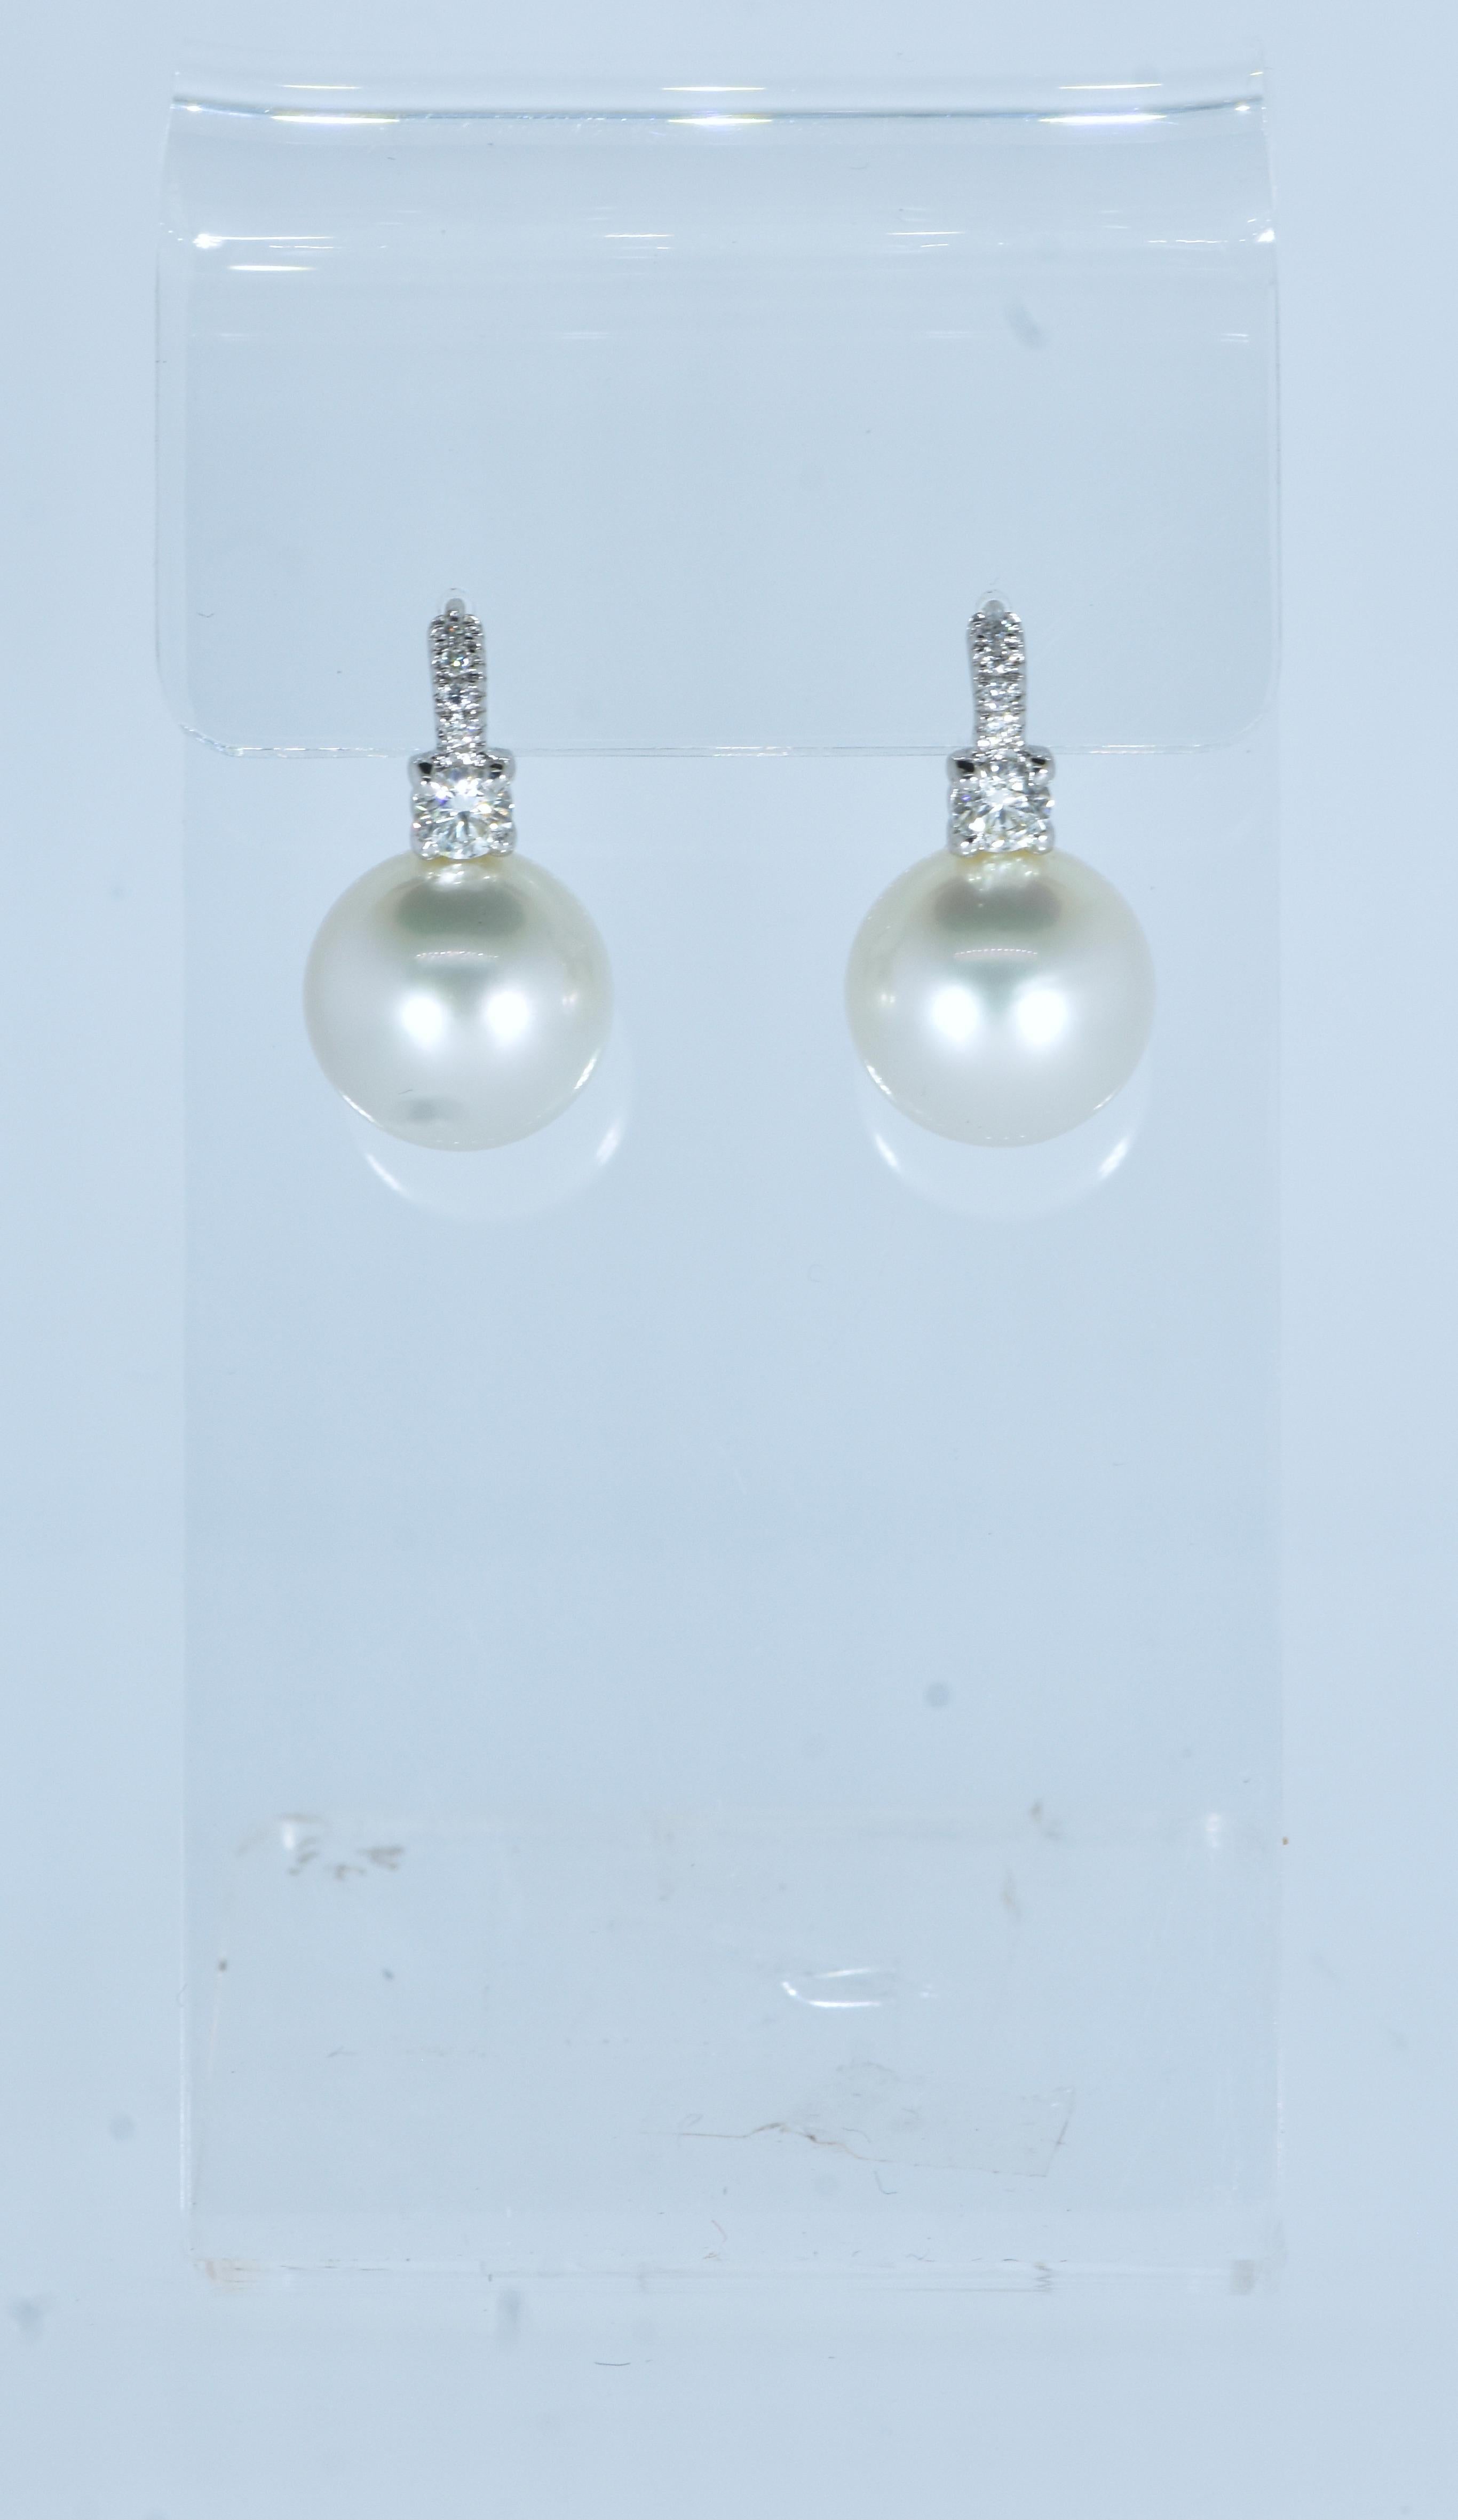 Brilliant Cut South Sea Pearl and Diamond 18k White Gold Fine Contemporary Earrings